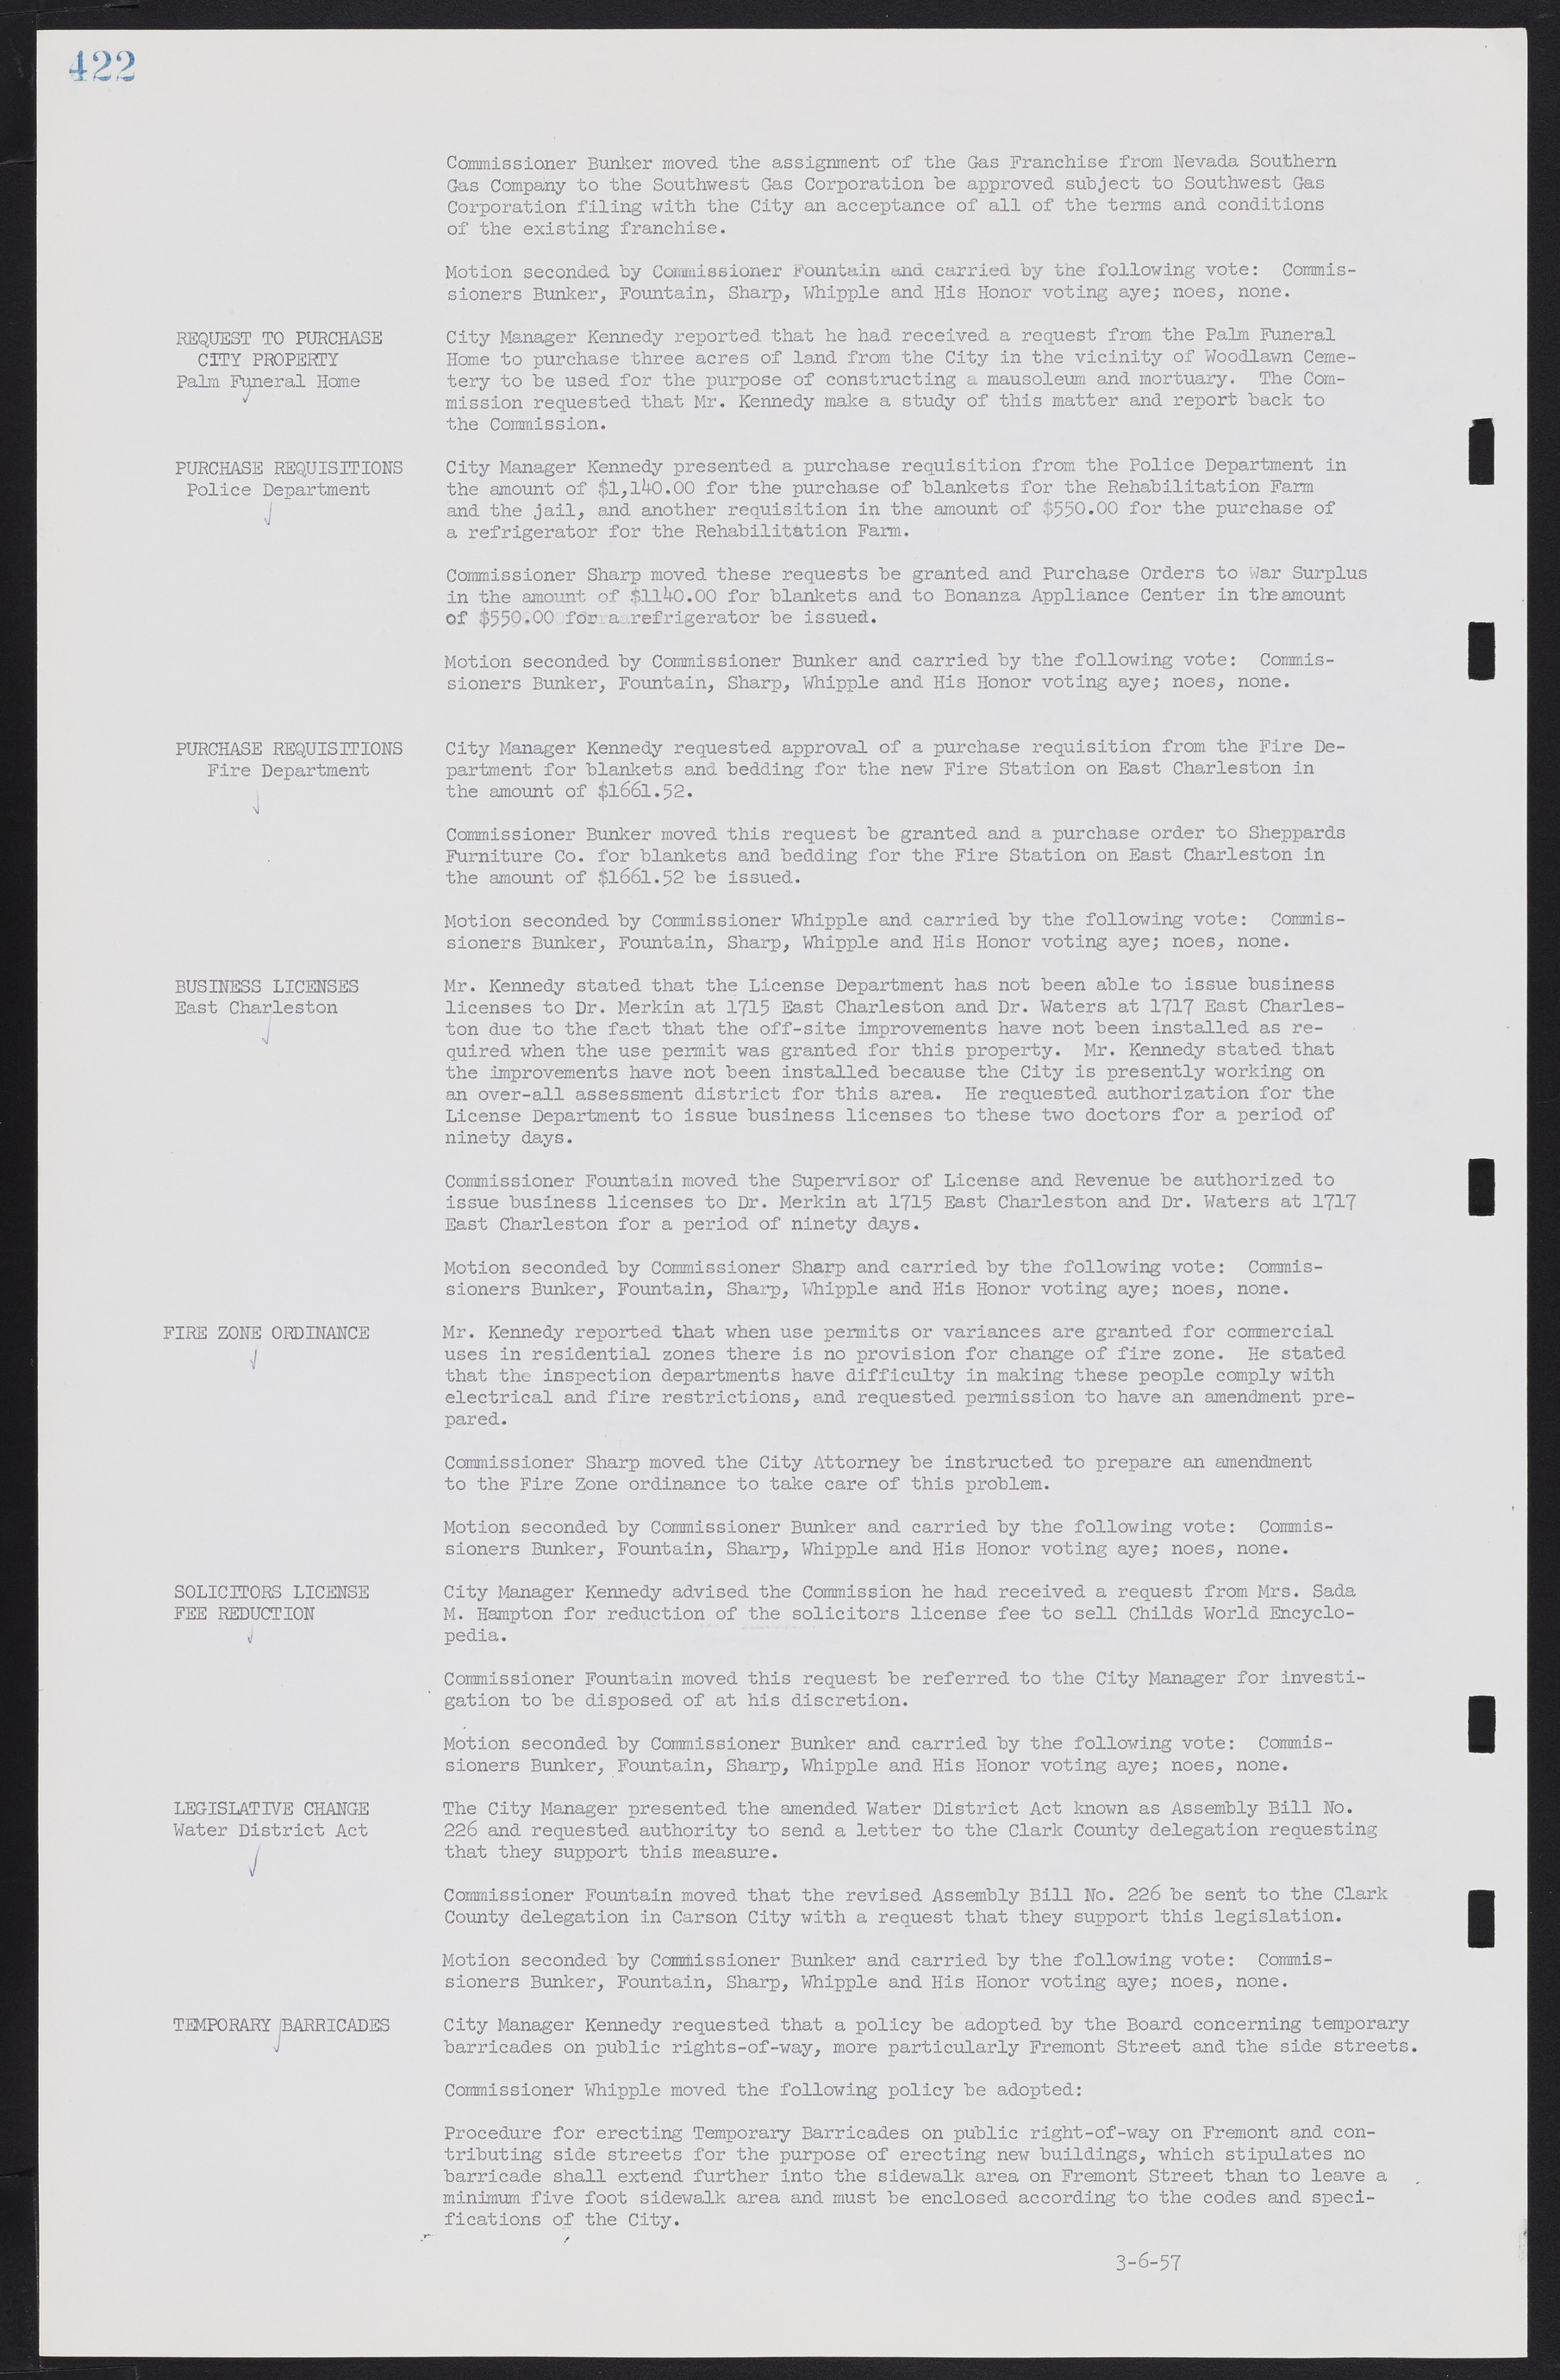 Las Vegas City Commission Minutes, September 21, 1955 to November 20, 1957, lvc000010-442